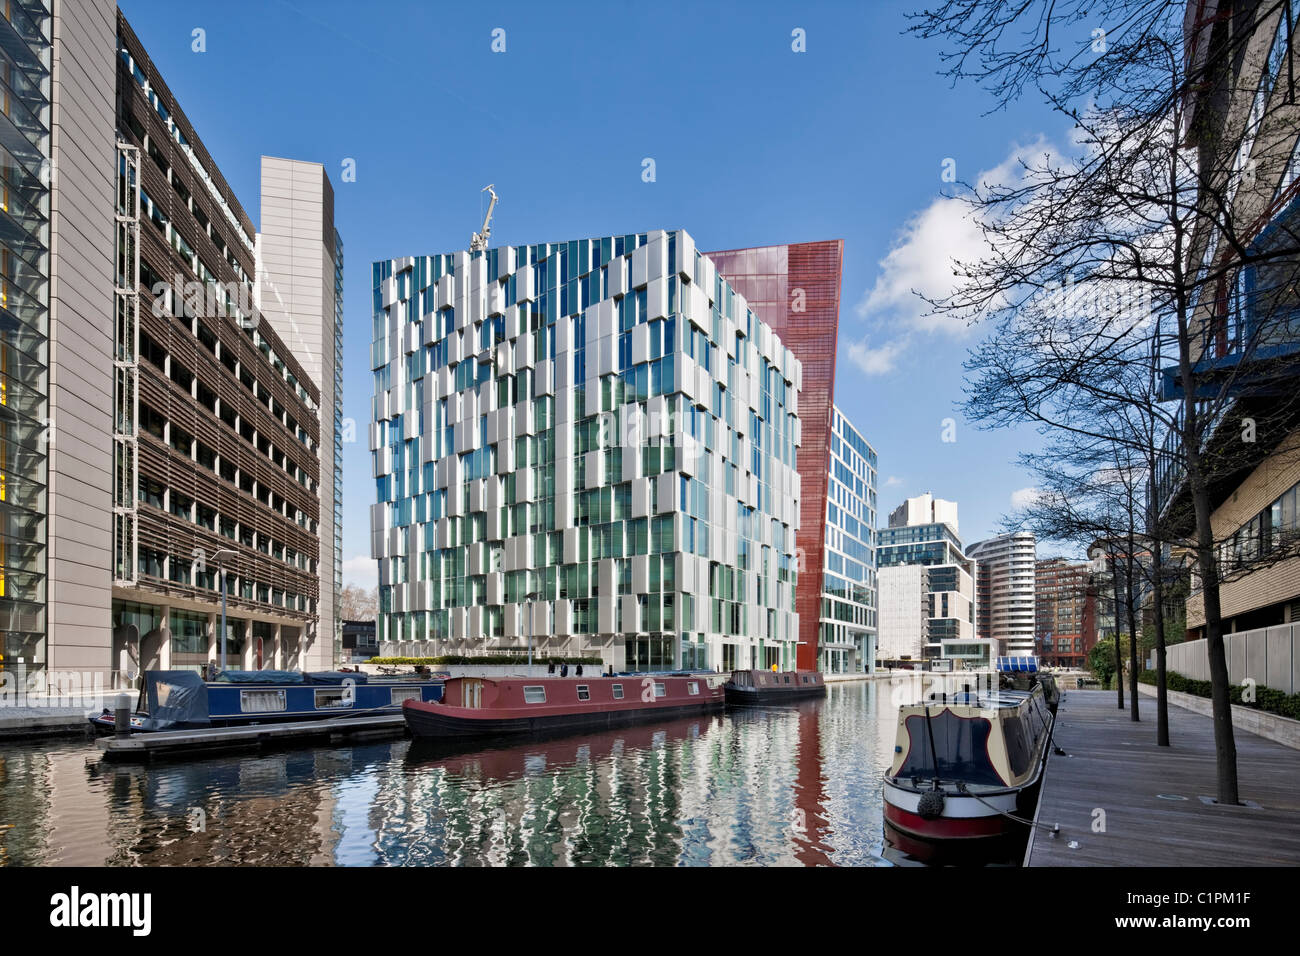 Carmine Gebäude in Merchant Square, Paddington Basin, entworfen vom Architekten Mossessian & Partner. Stockfoto